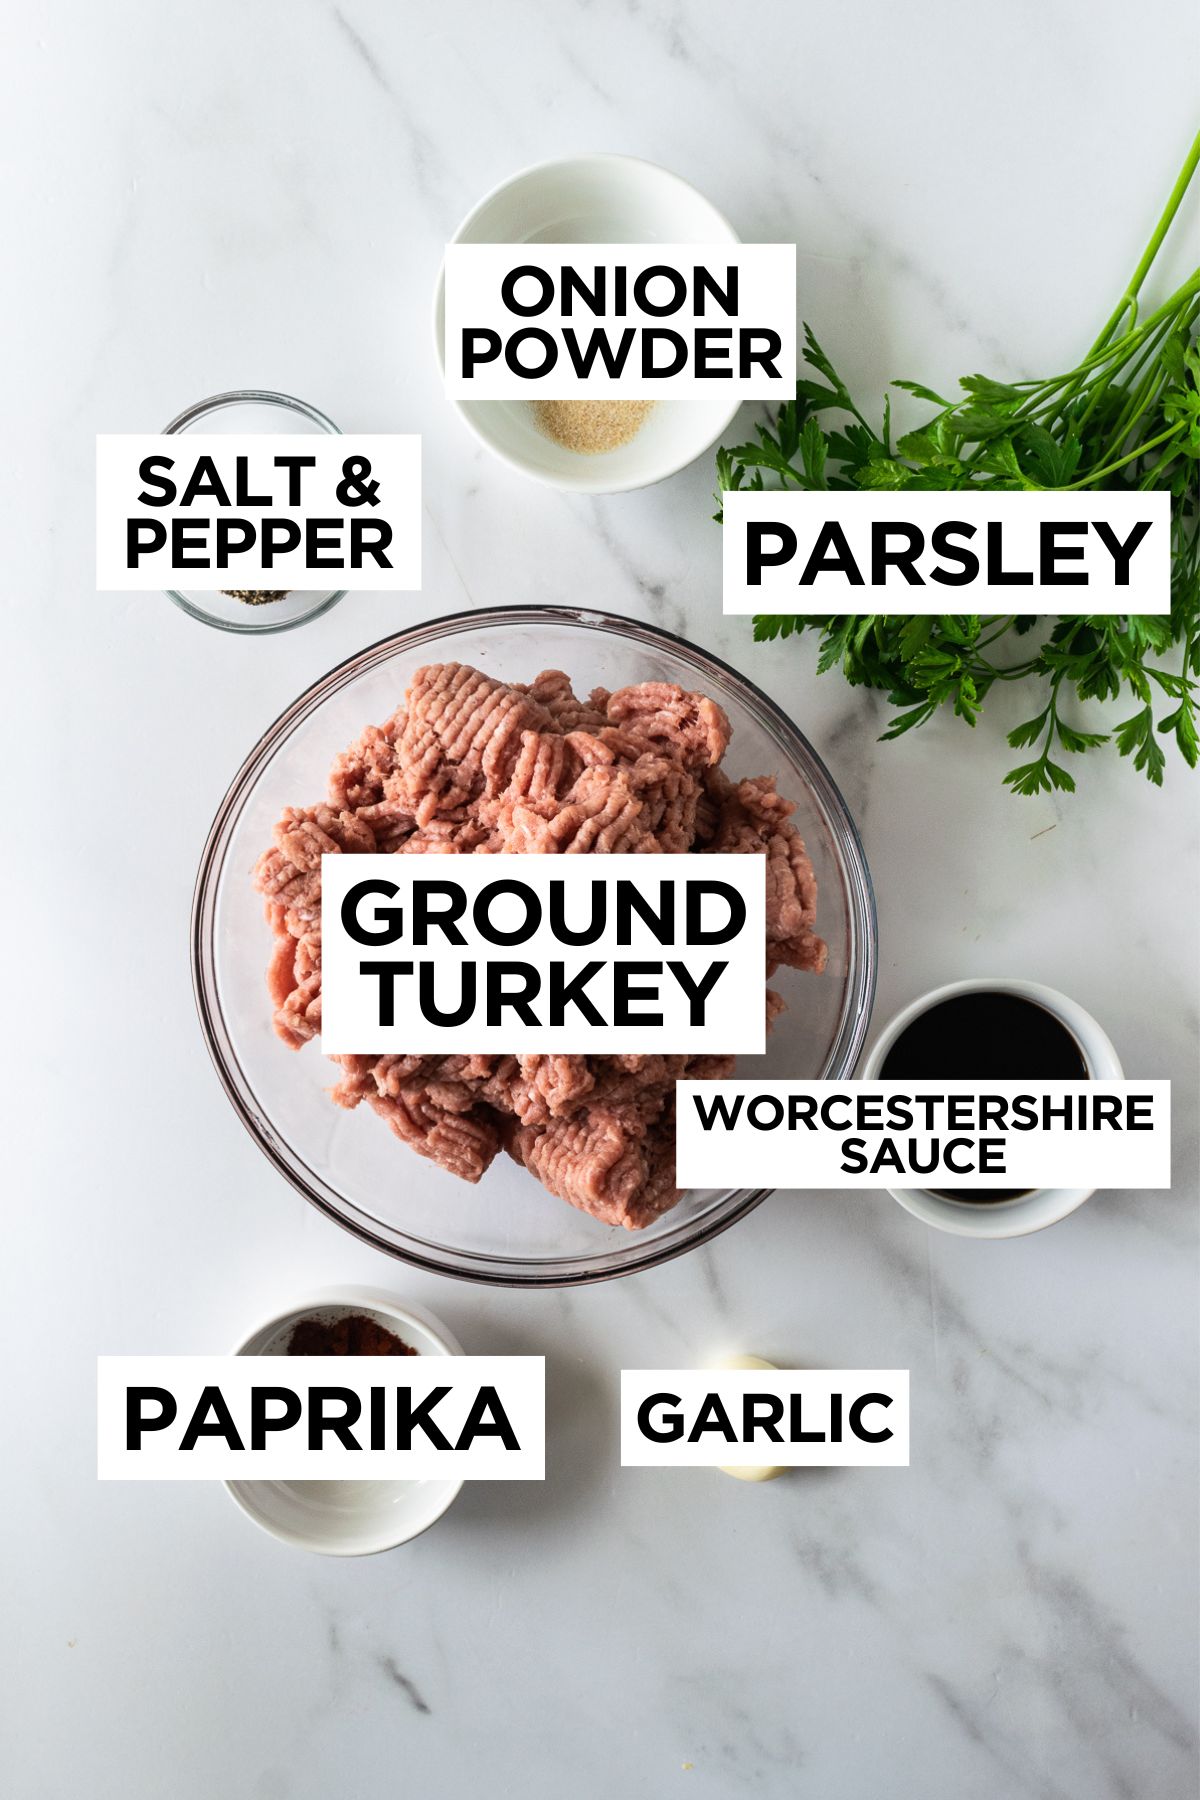 turkey burger ingredients such as beef, onion powder, salt, pepper, garlic, parsley and worcestershire sauce.